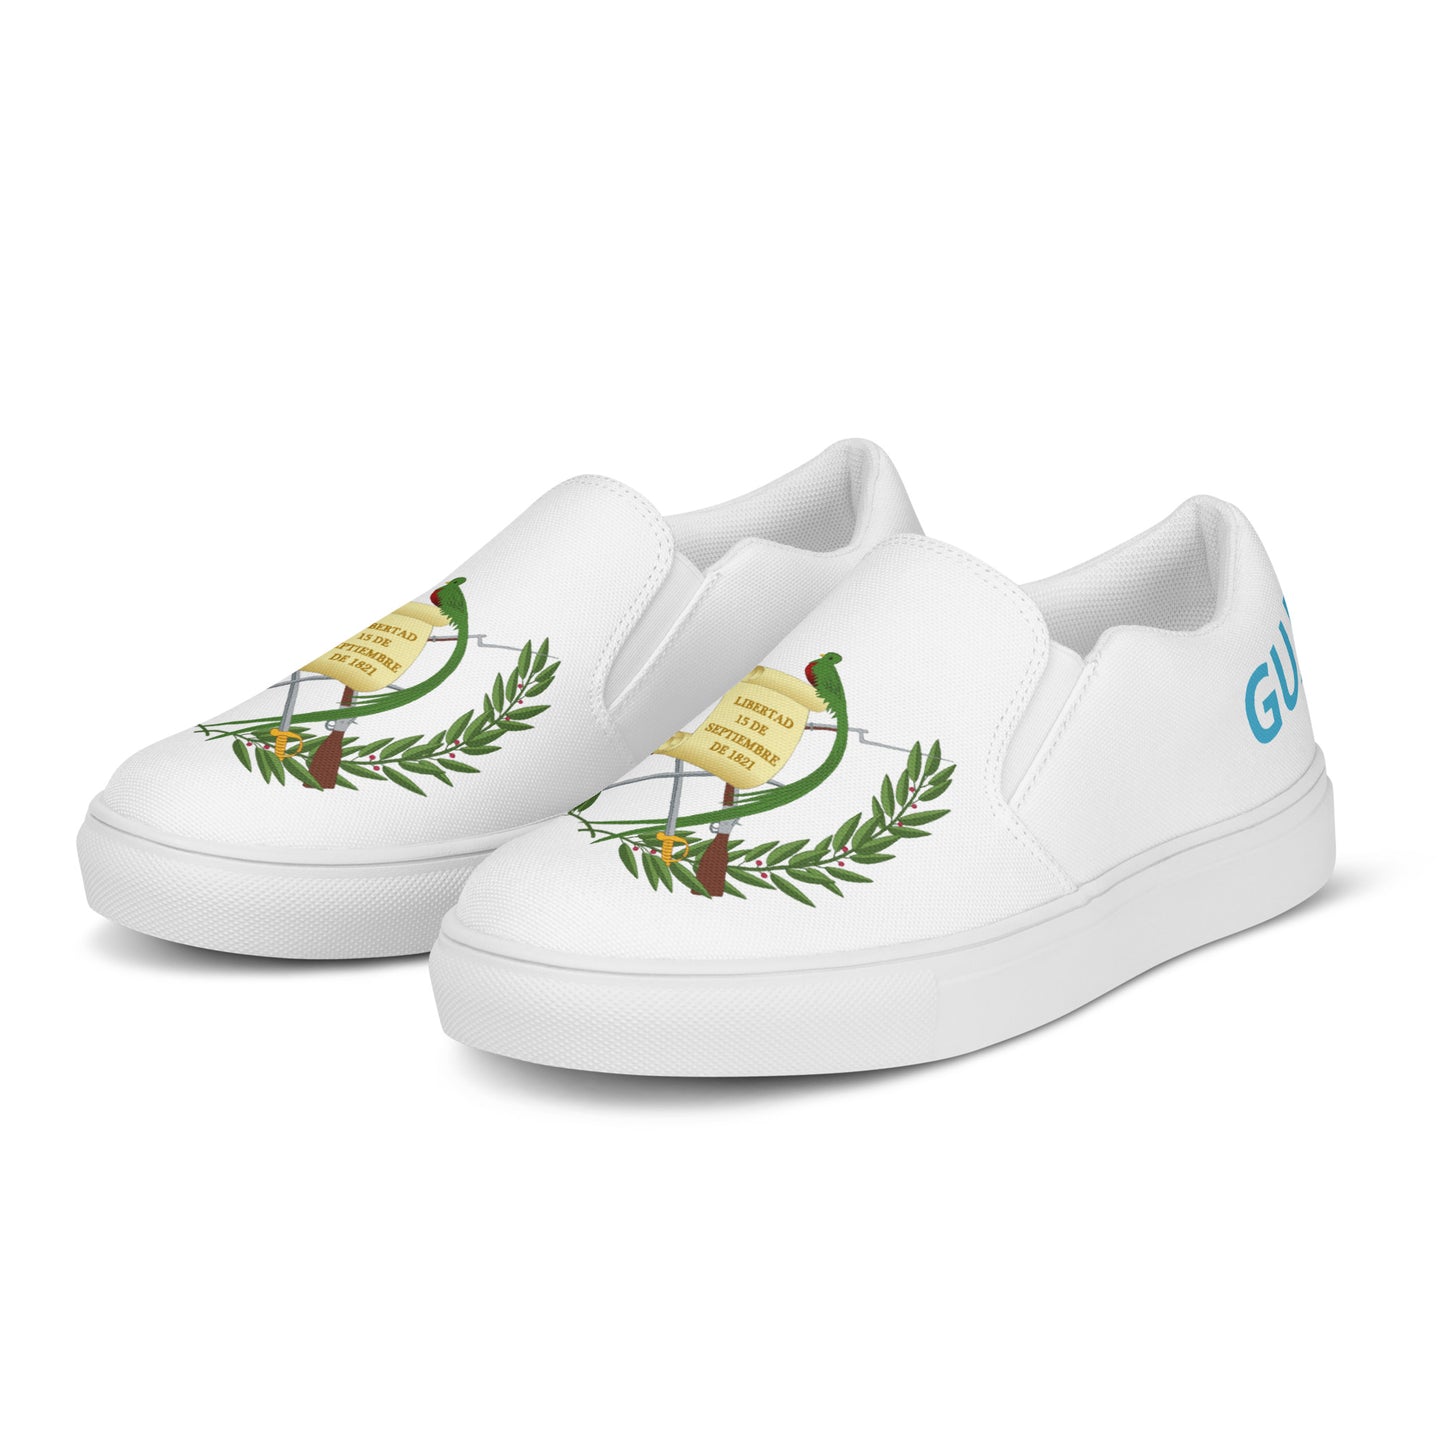 Guatemala - Men - White - Slip-on shoes